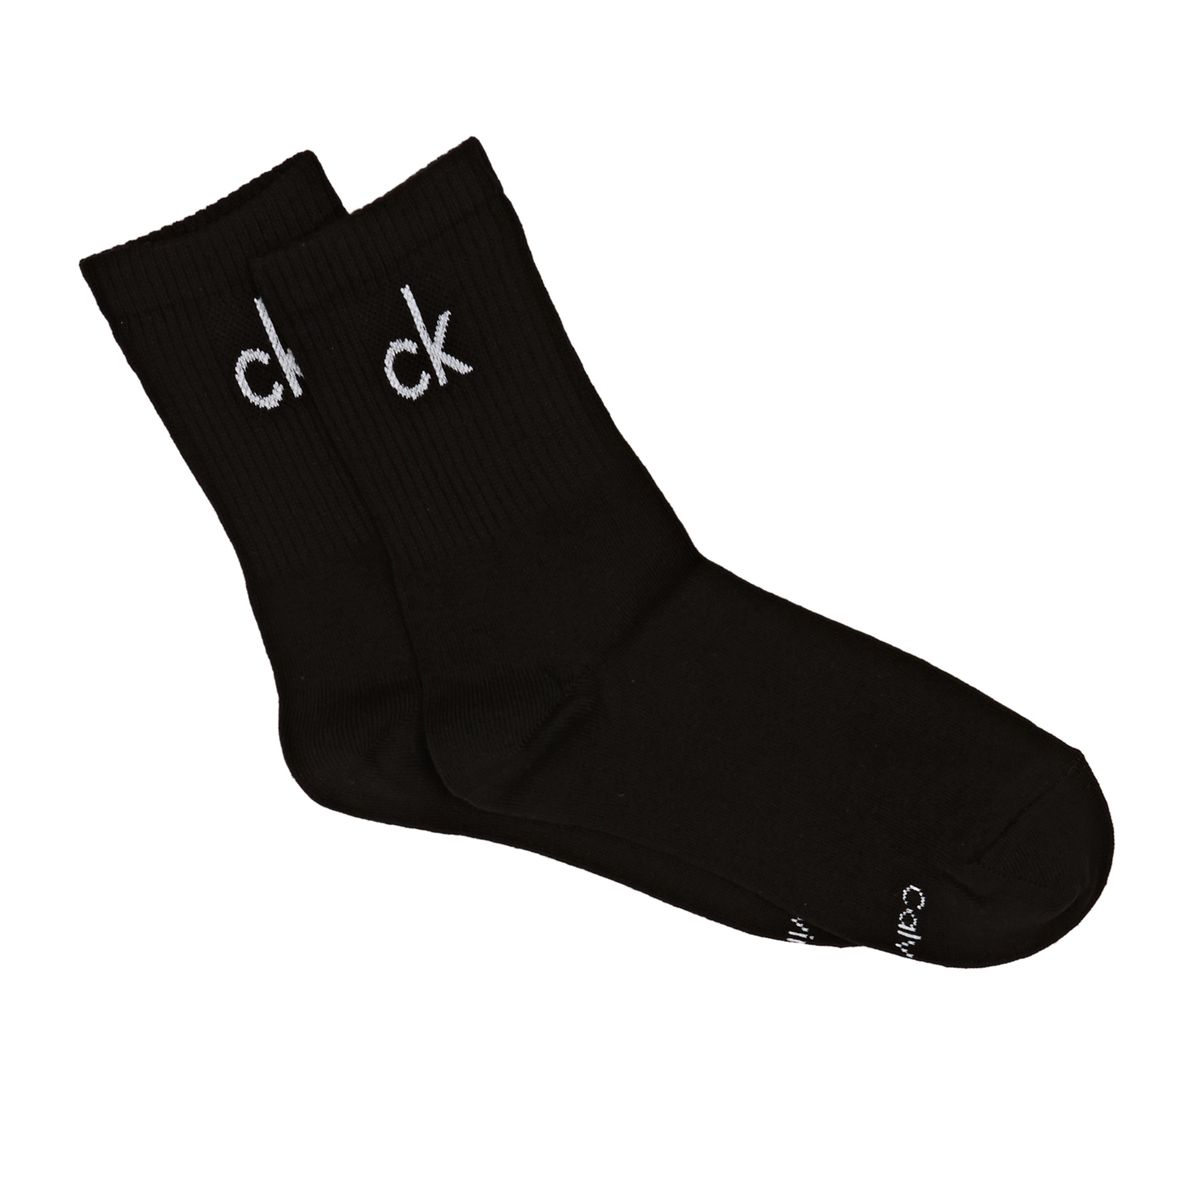 Socks Logos